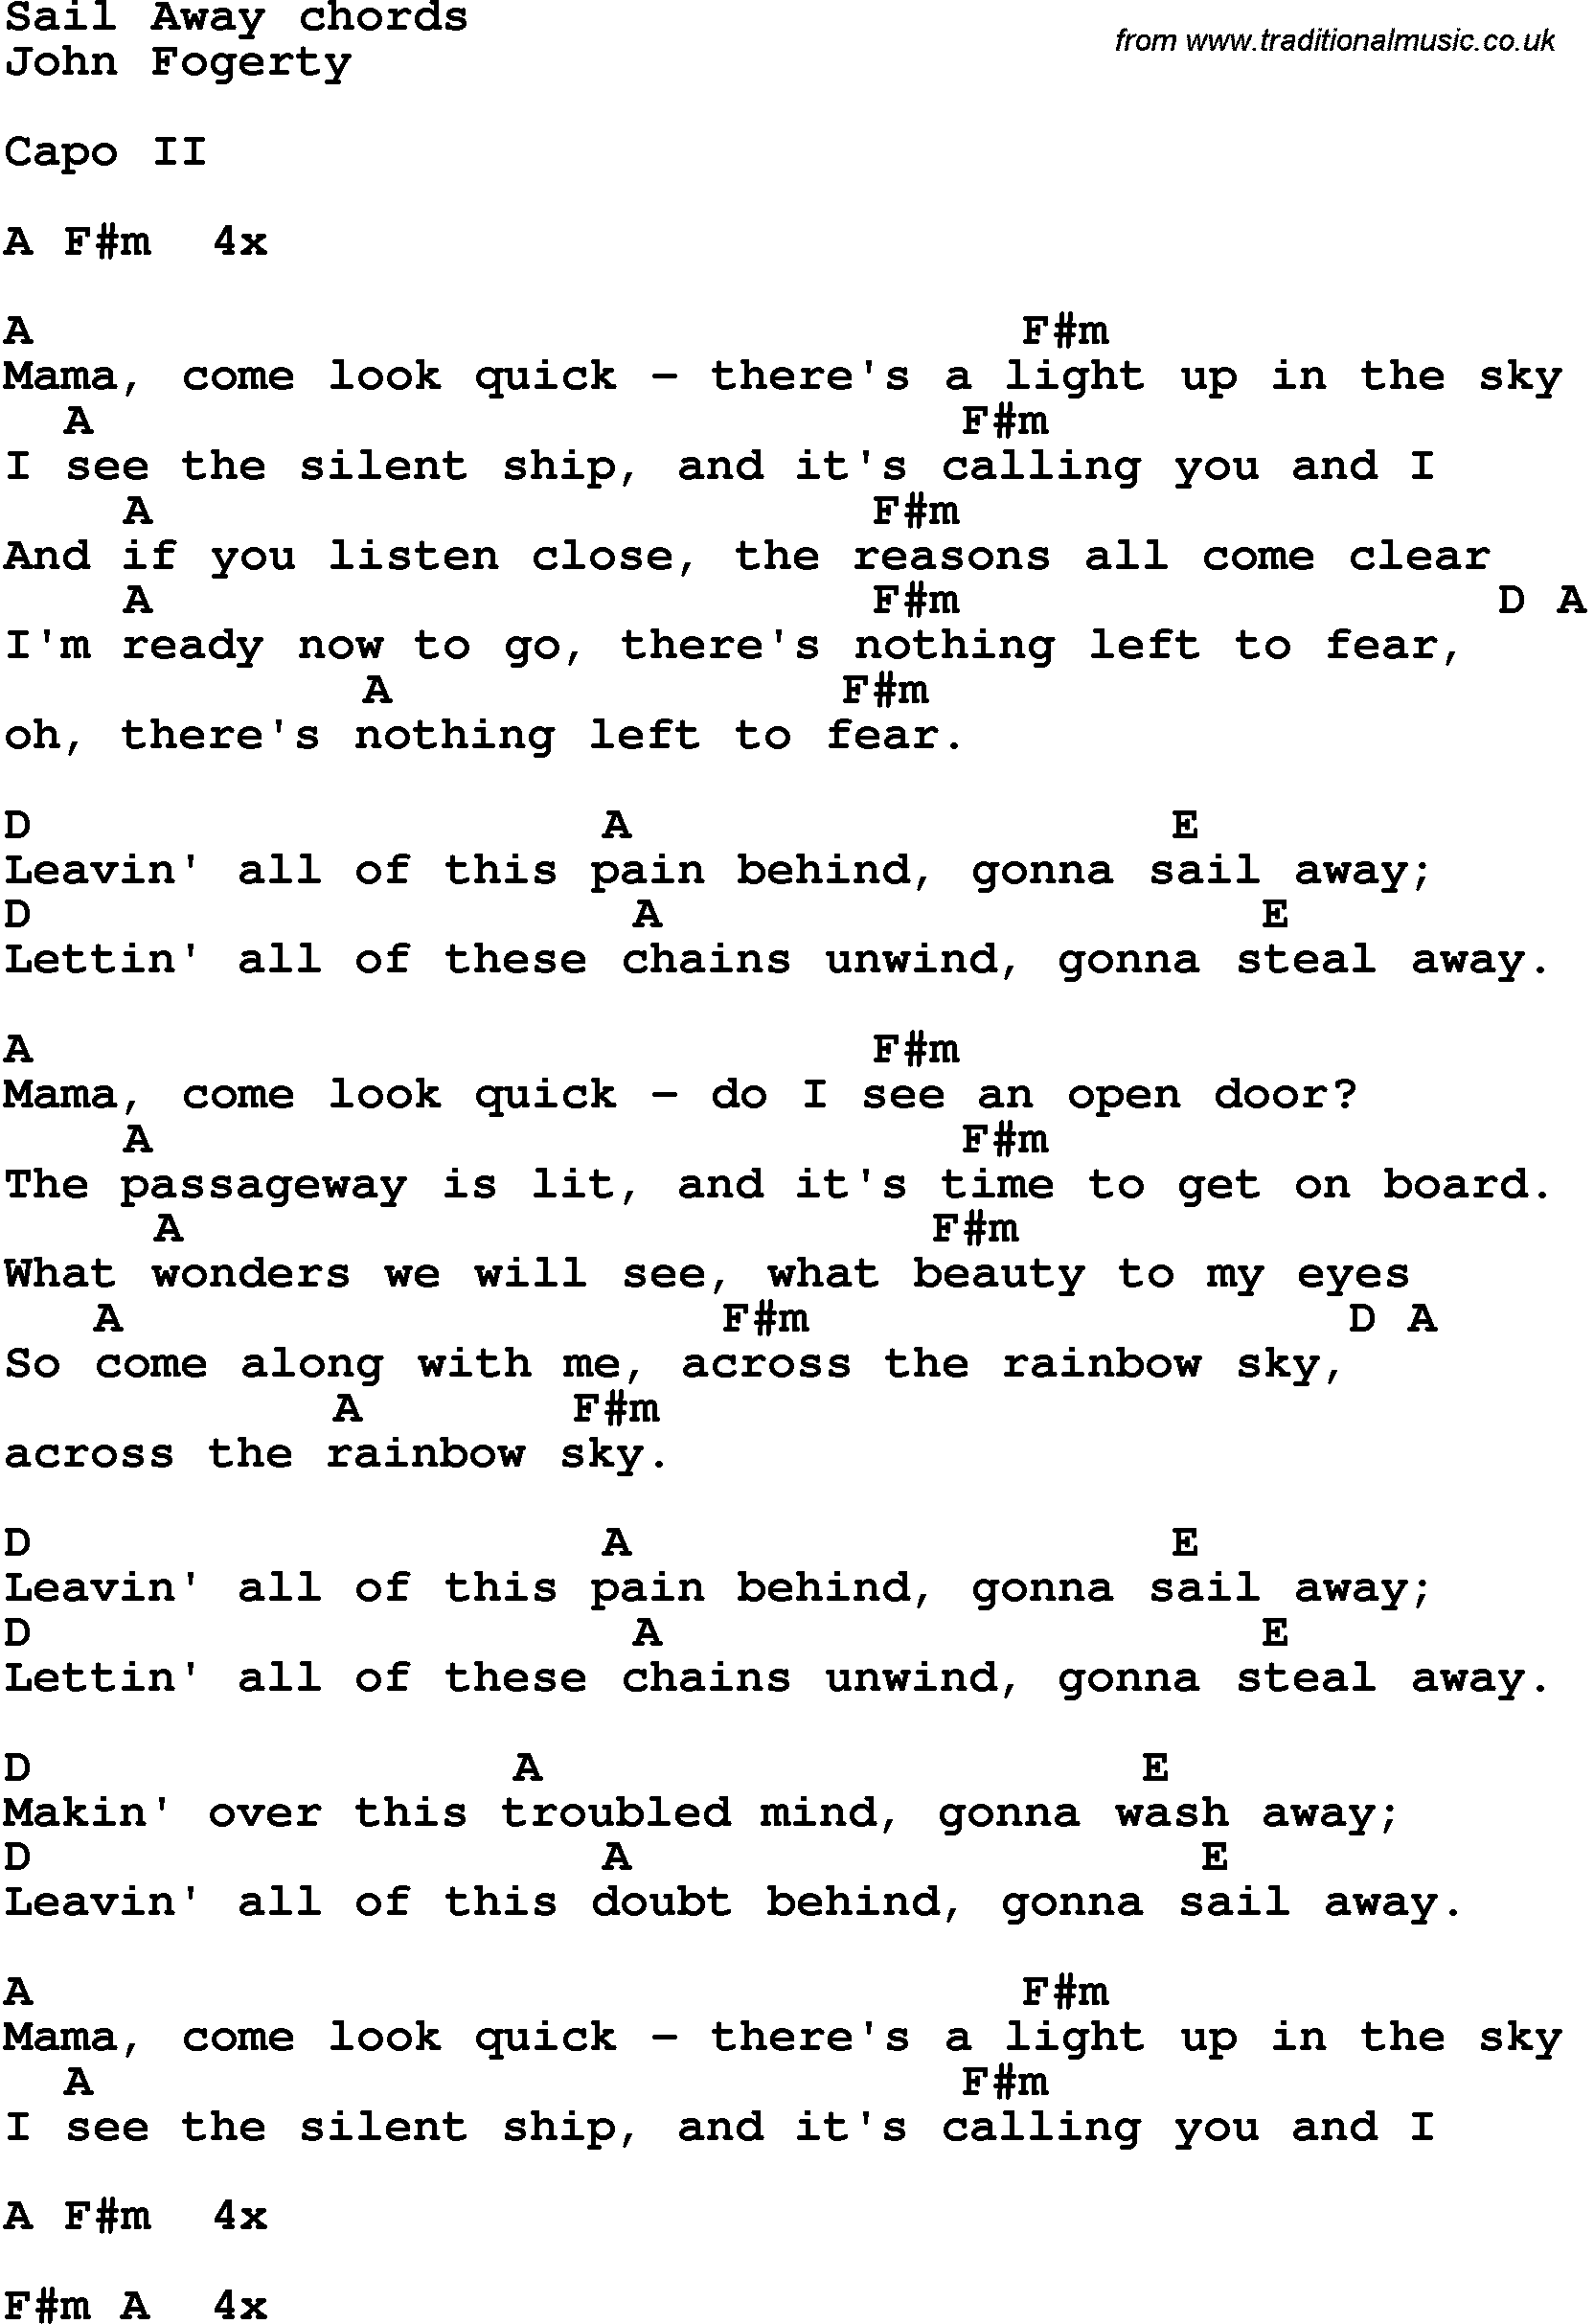 Song Lyrics with guitar chords for Sail Away